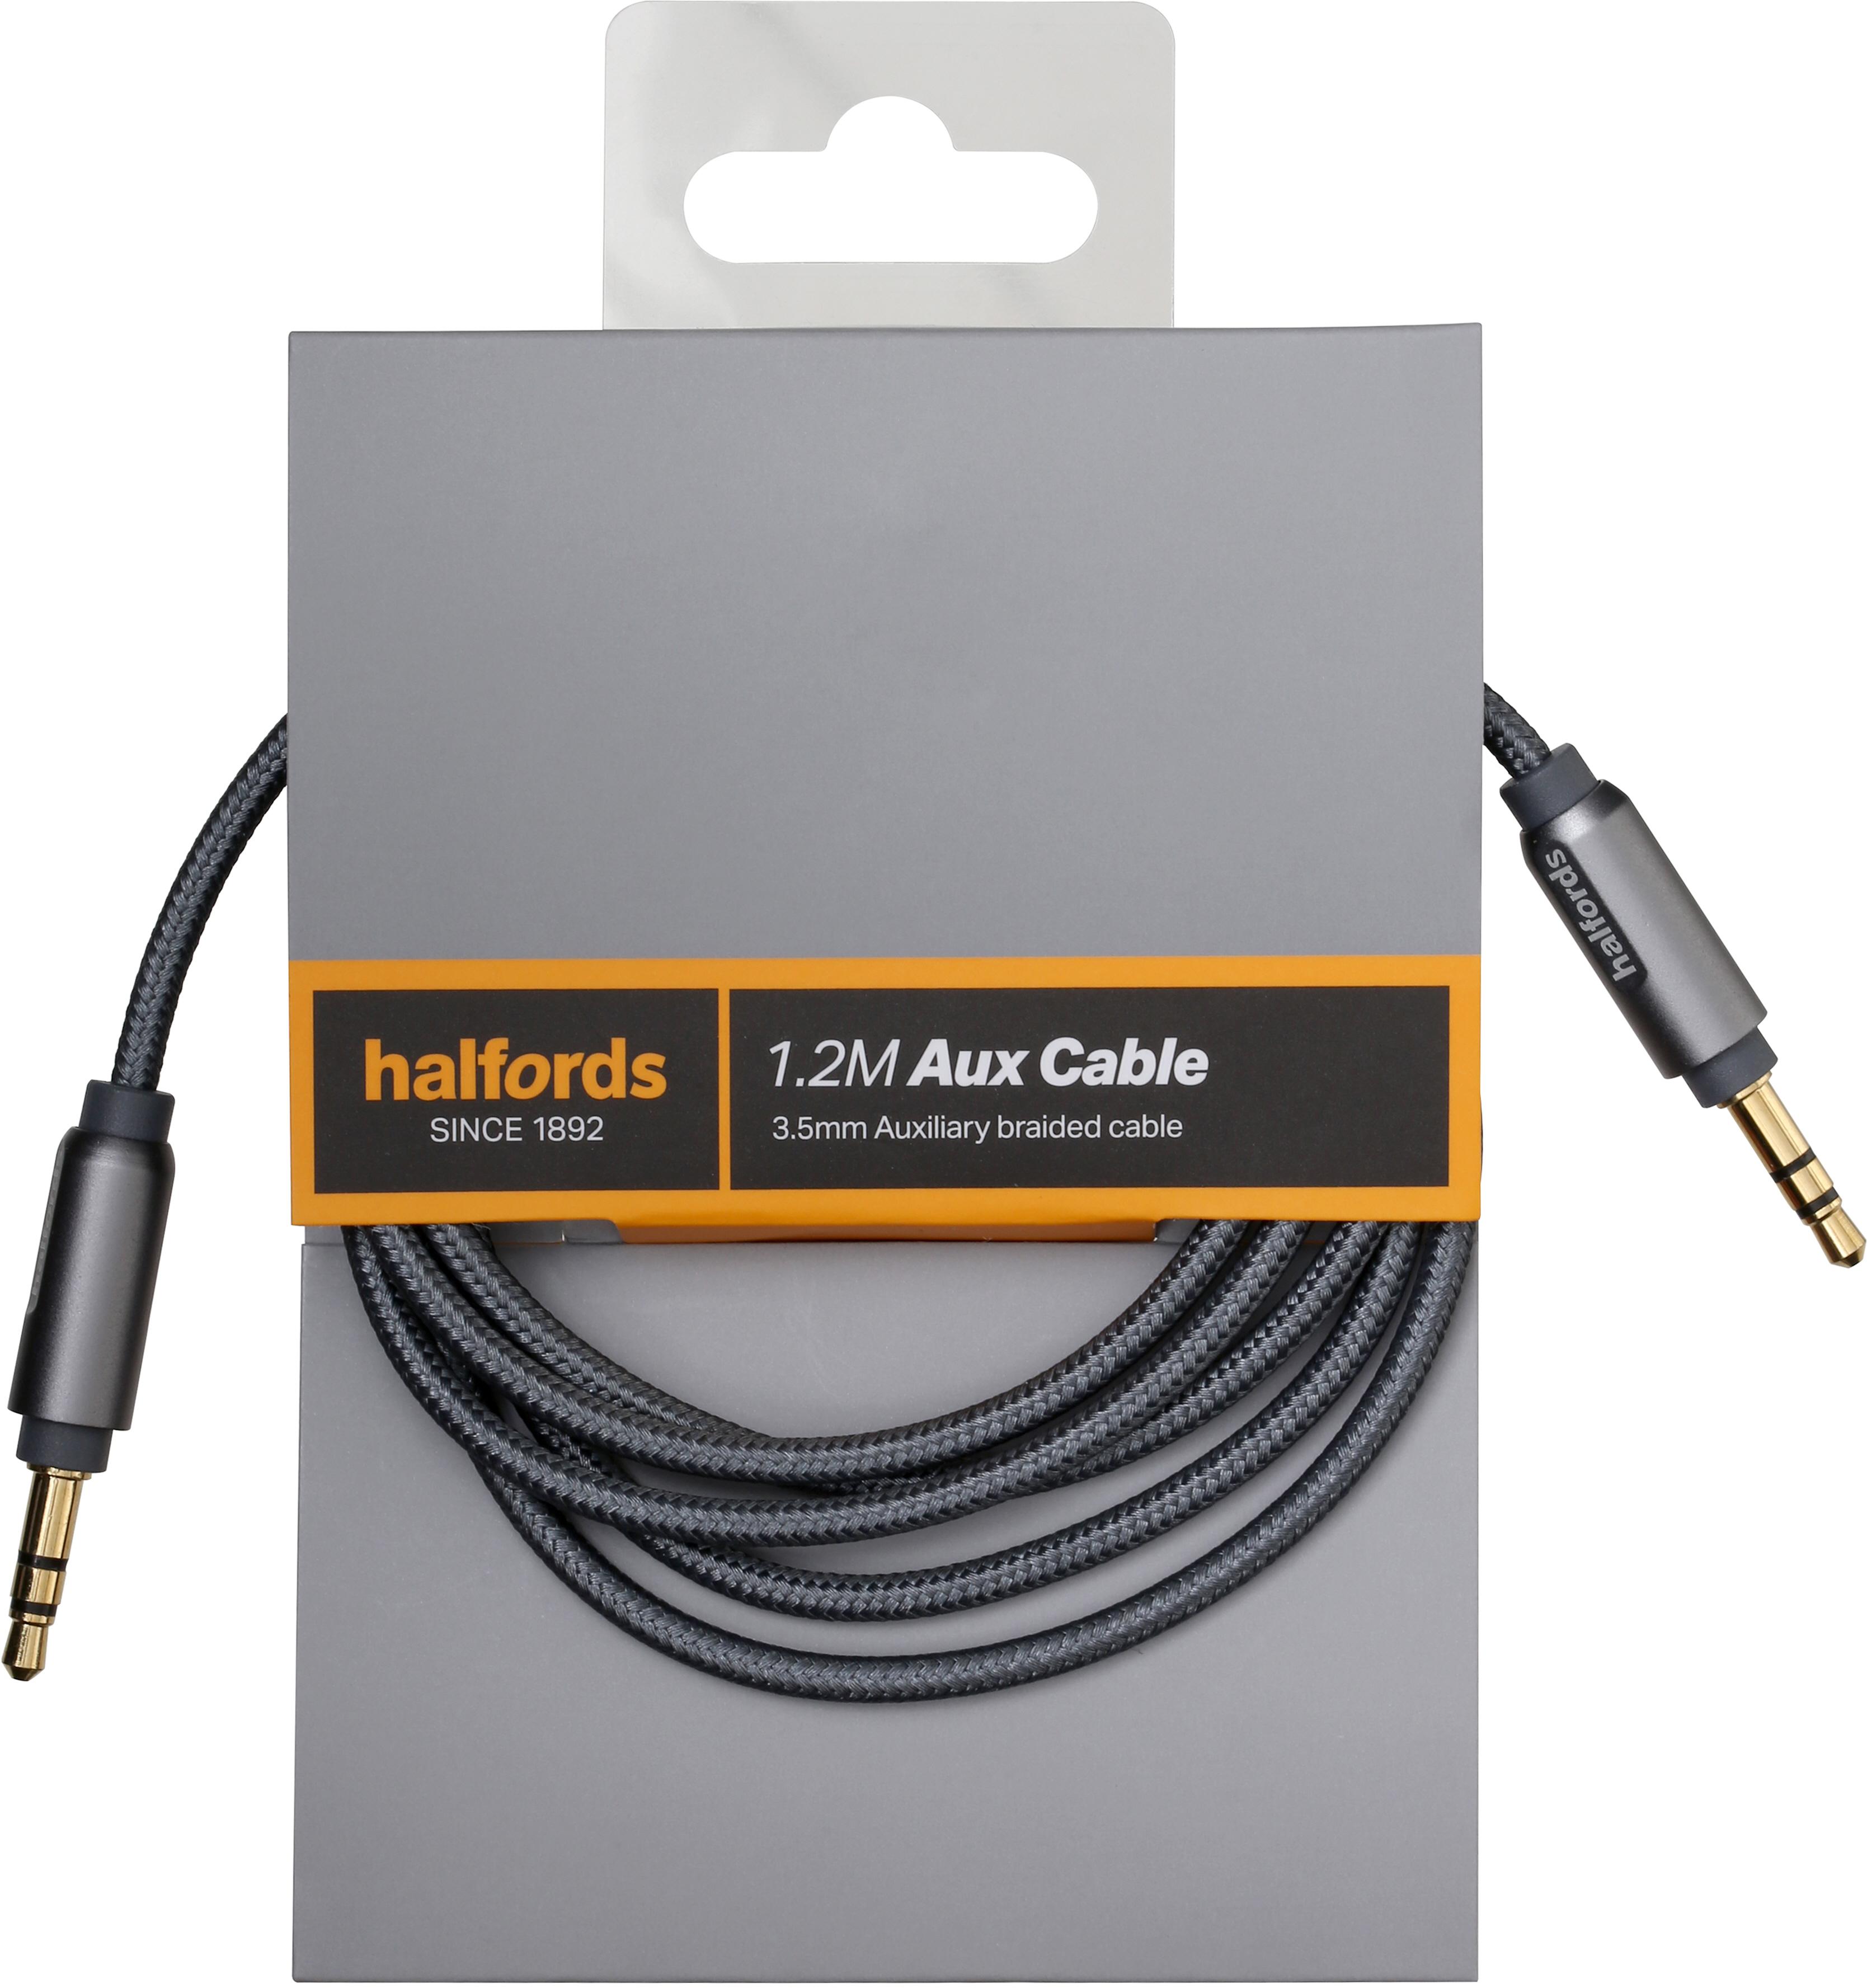 Halfords 1.2M Aux Cable Charcoal